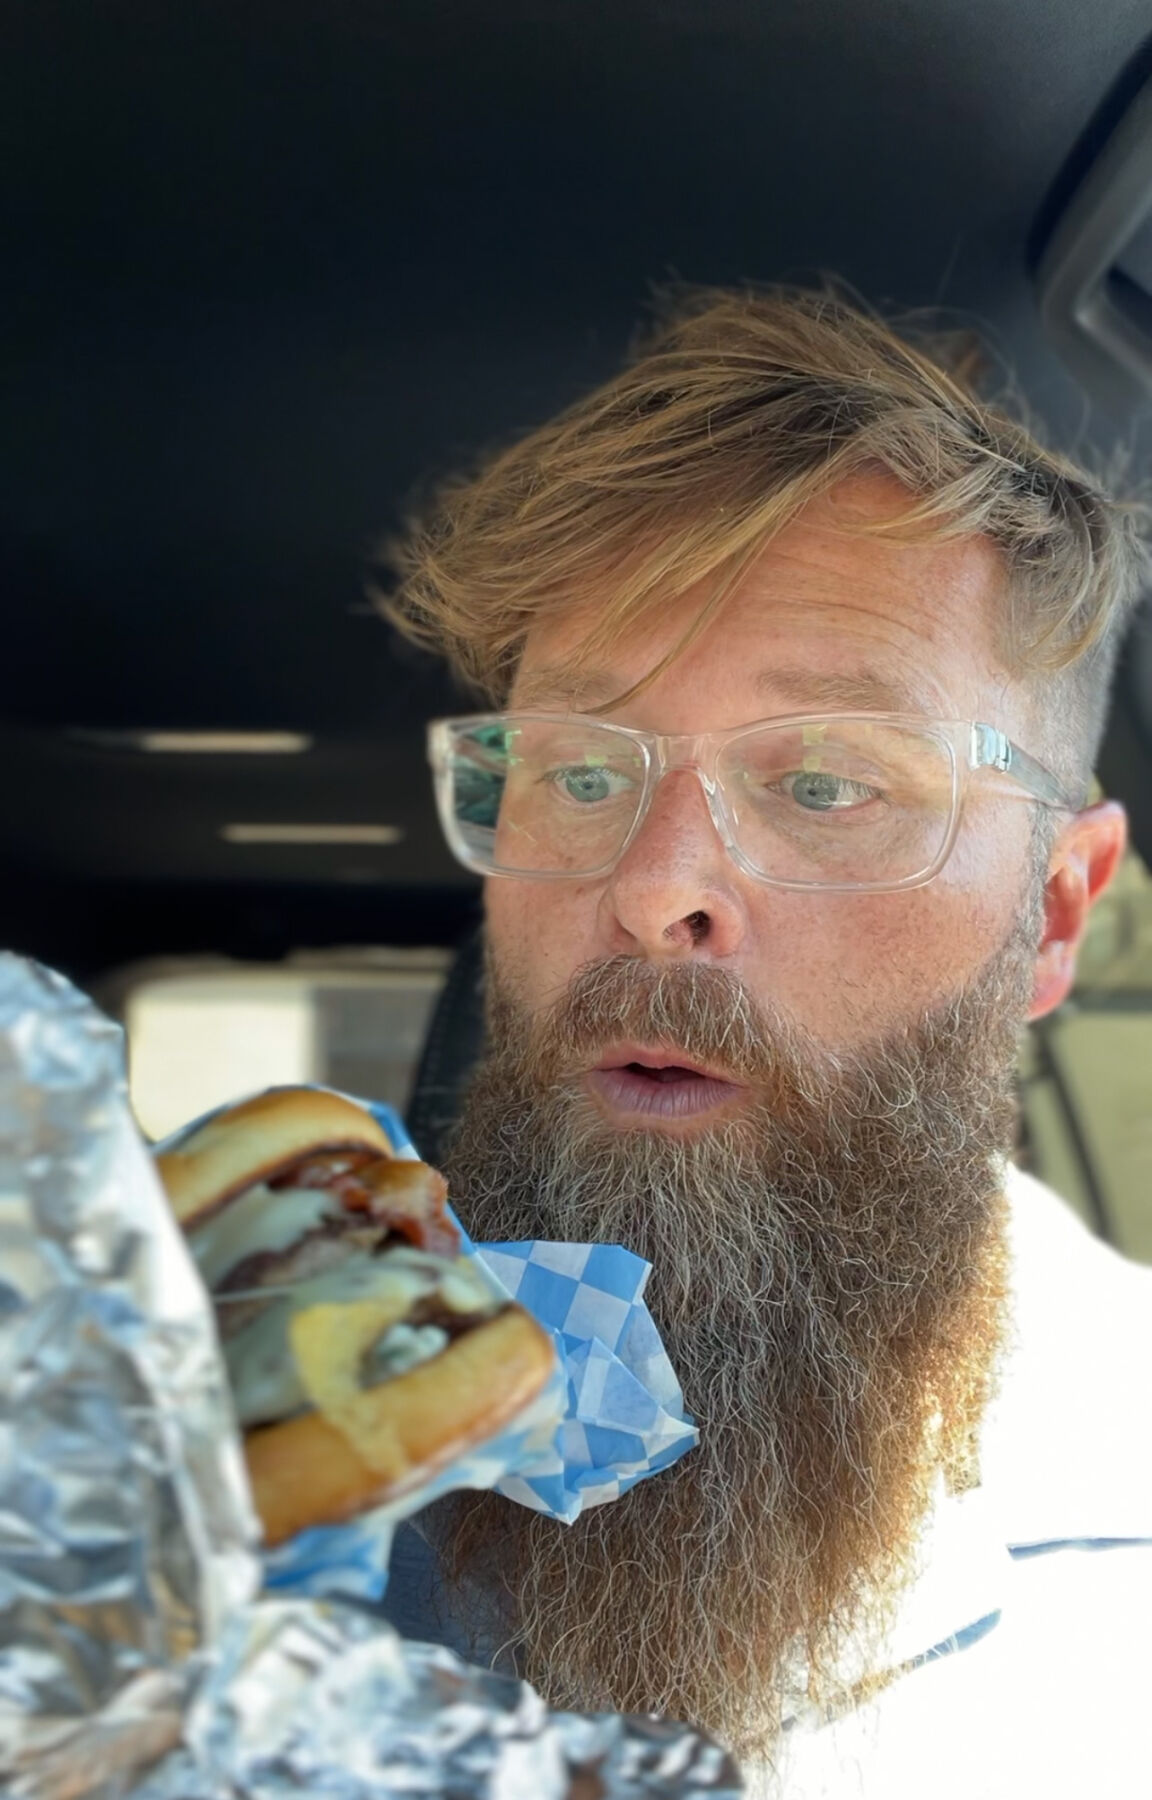 Bend's 'burger guy' celebrates one year of Burger Friday